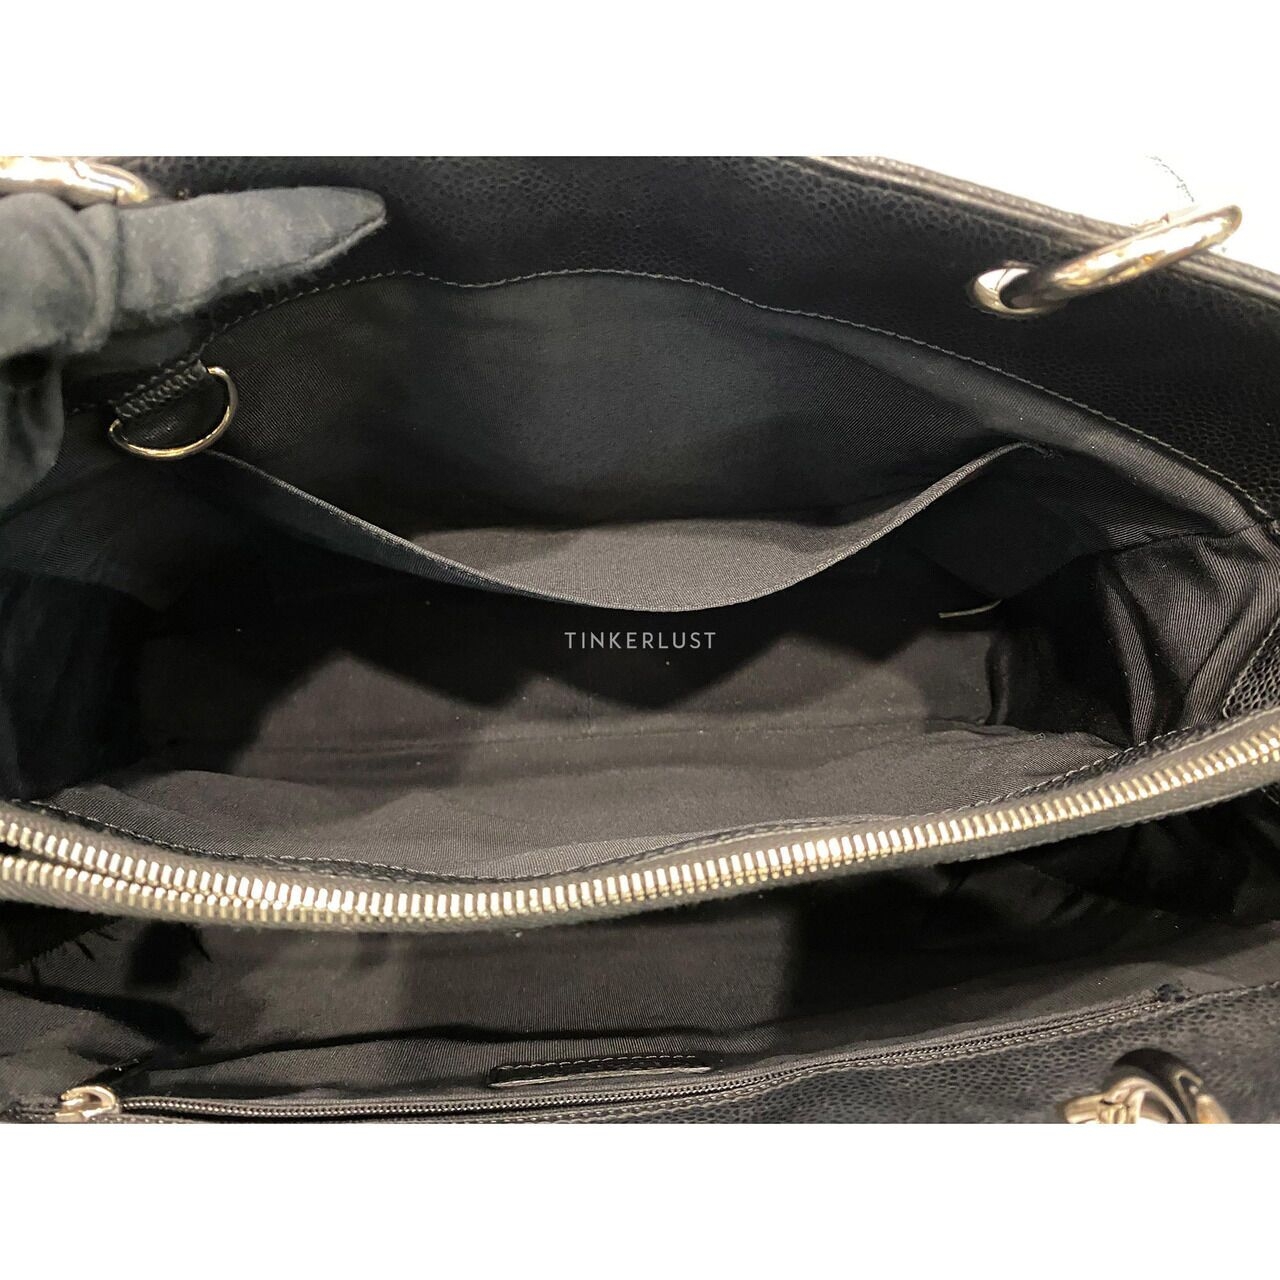 Chanel GST Medium Black Caviar SHW #12 Tote Bag